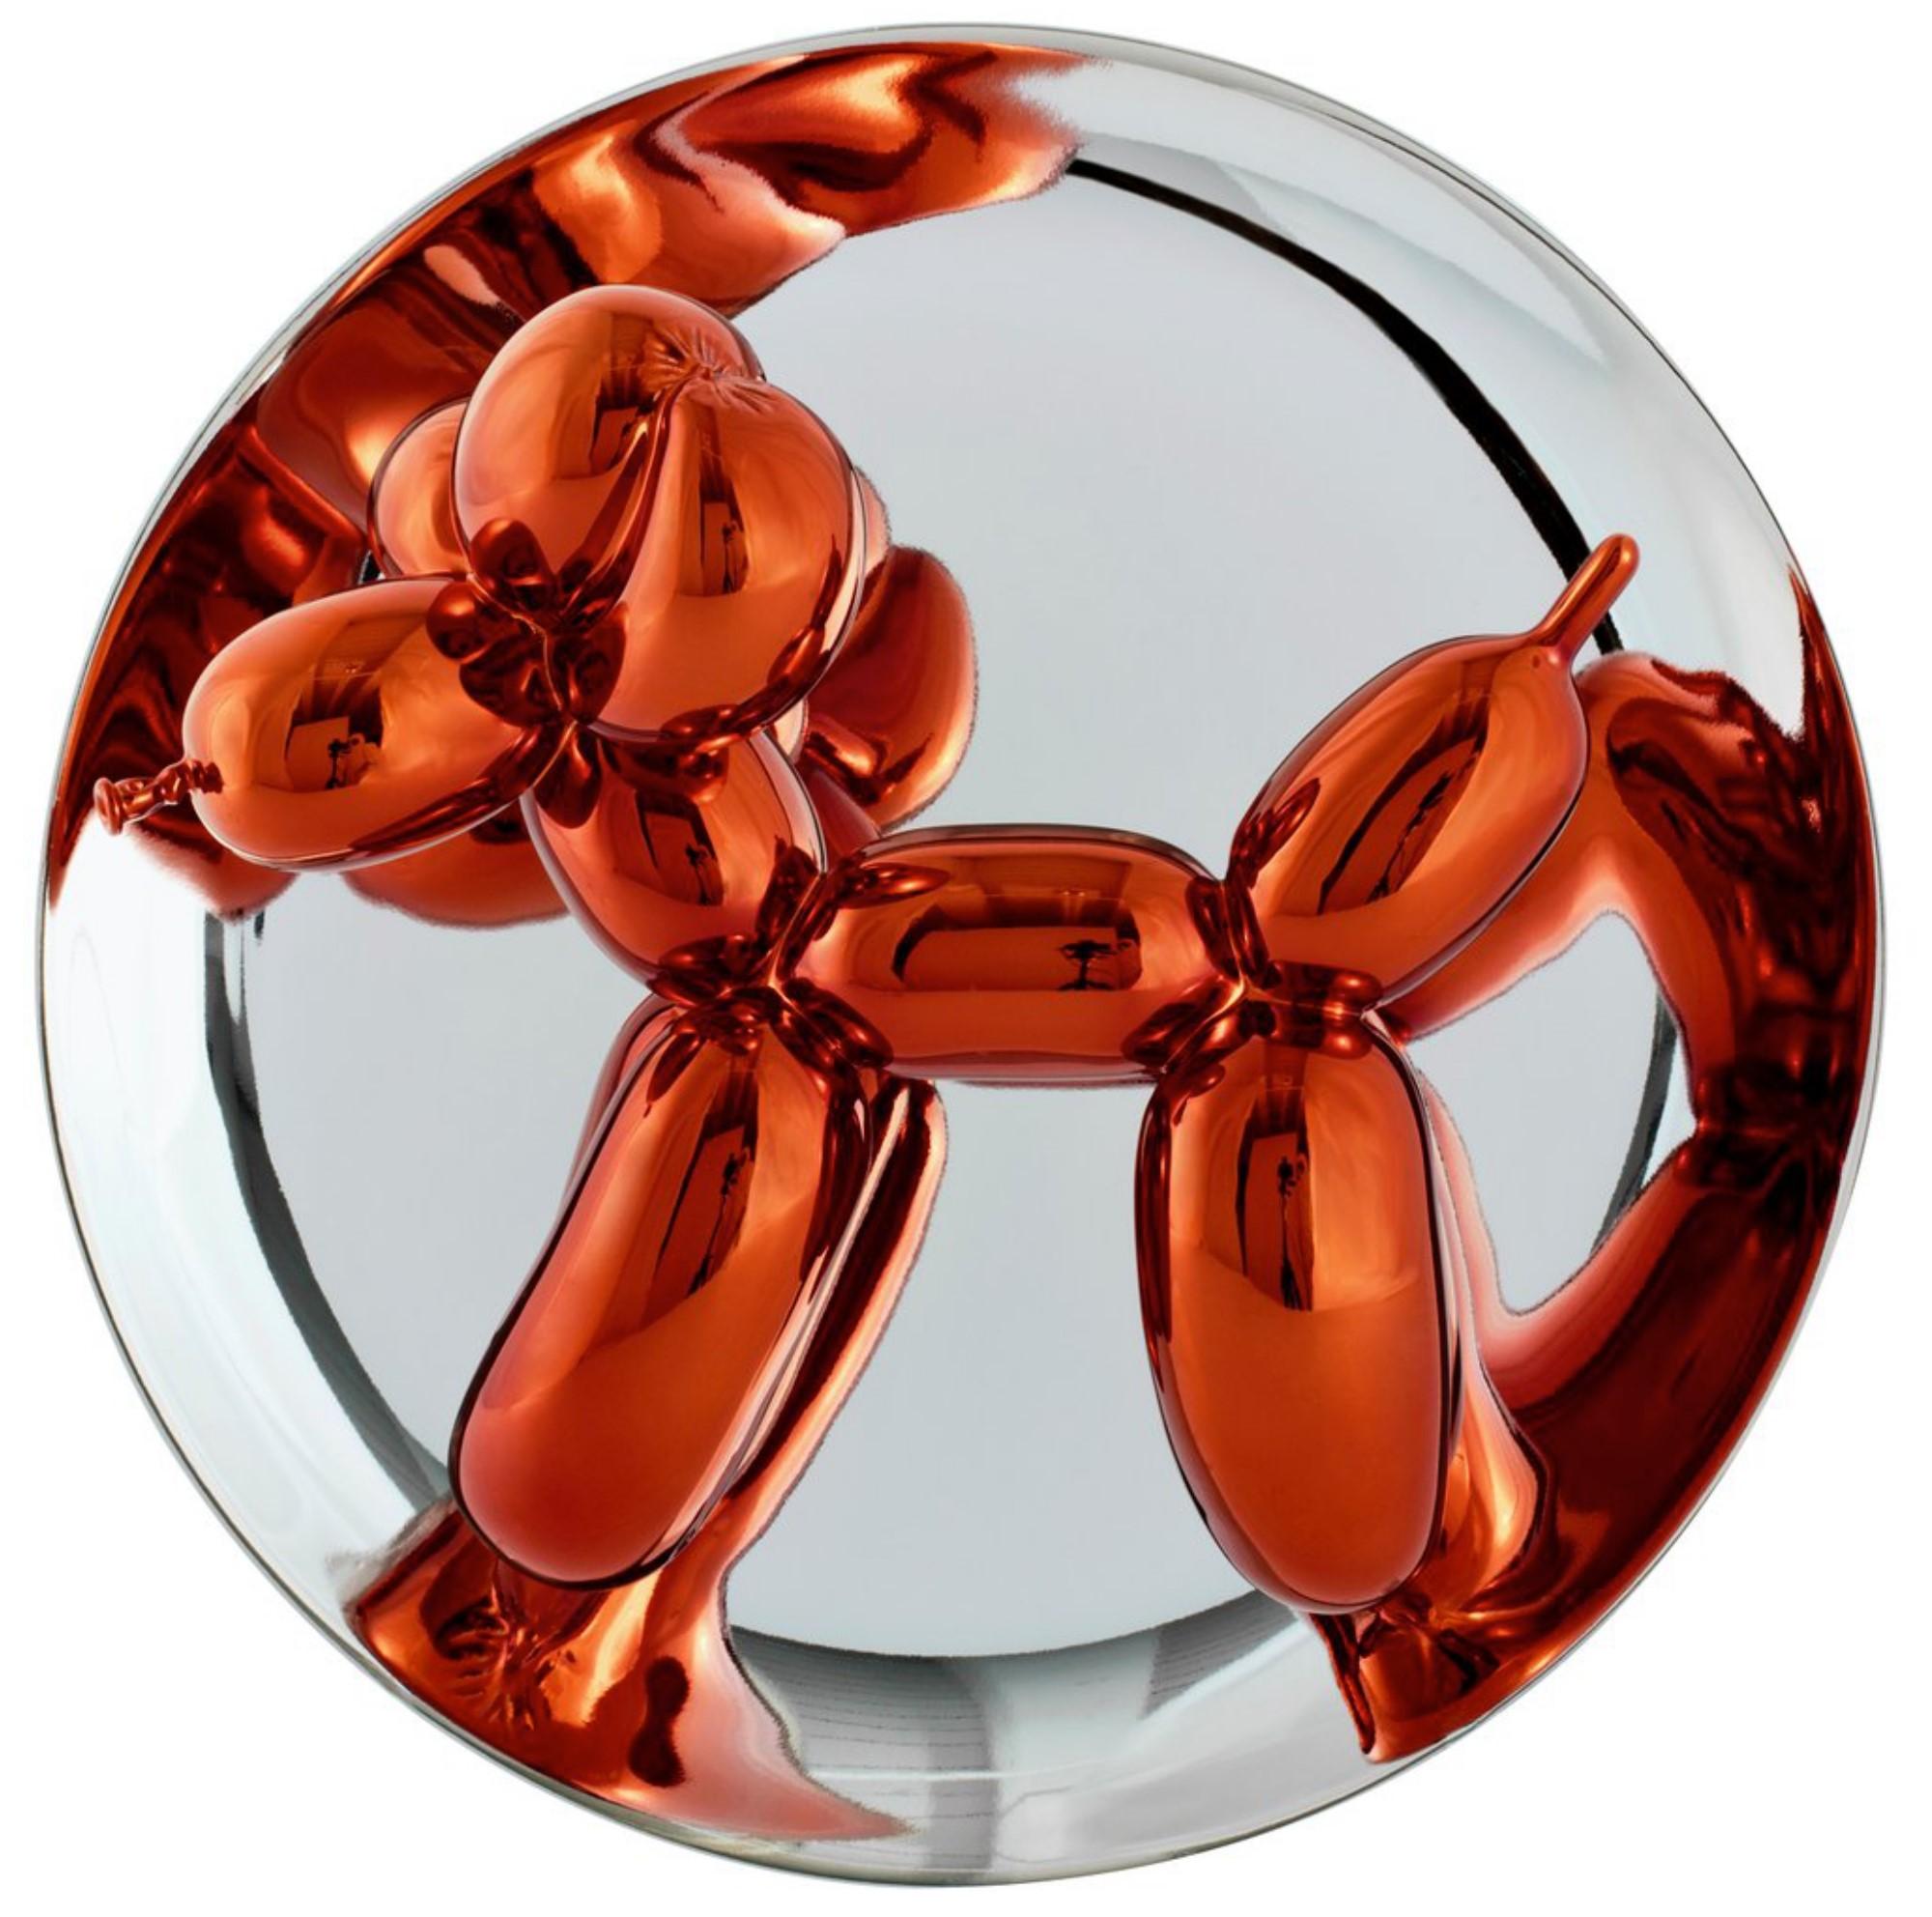 Ballon Dog Orange - Sculpture by Jeff Koons